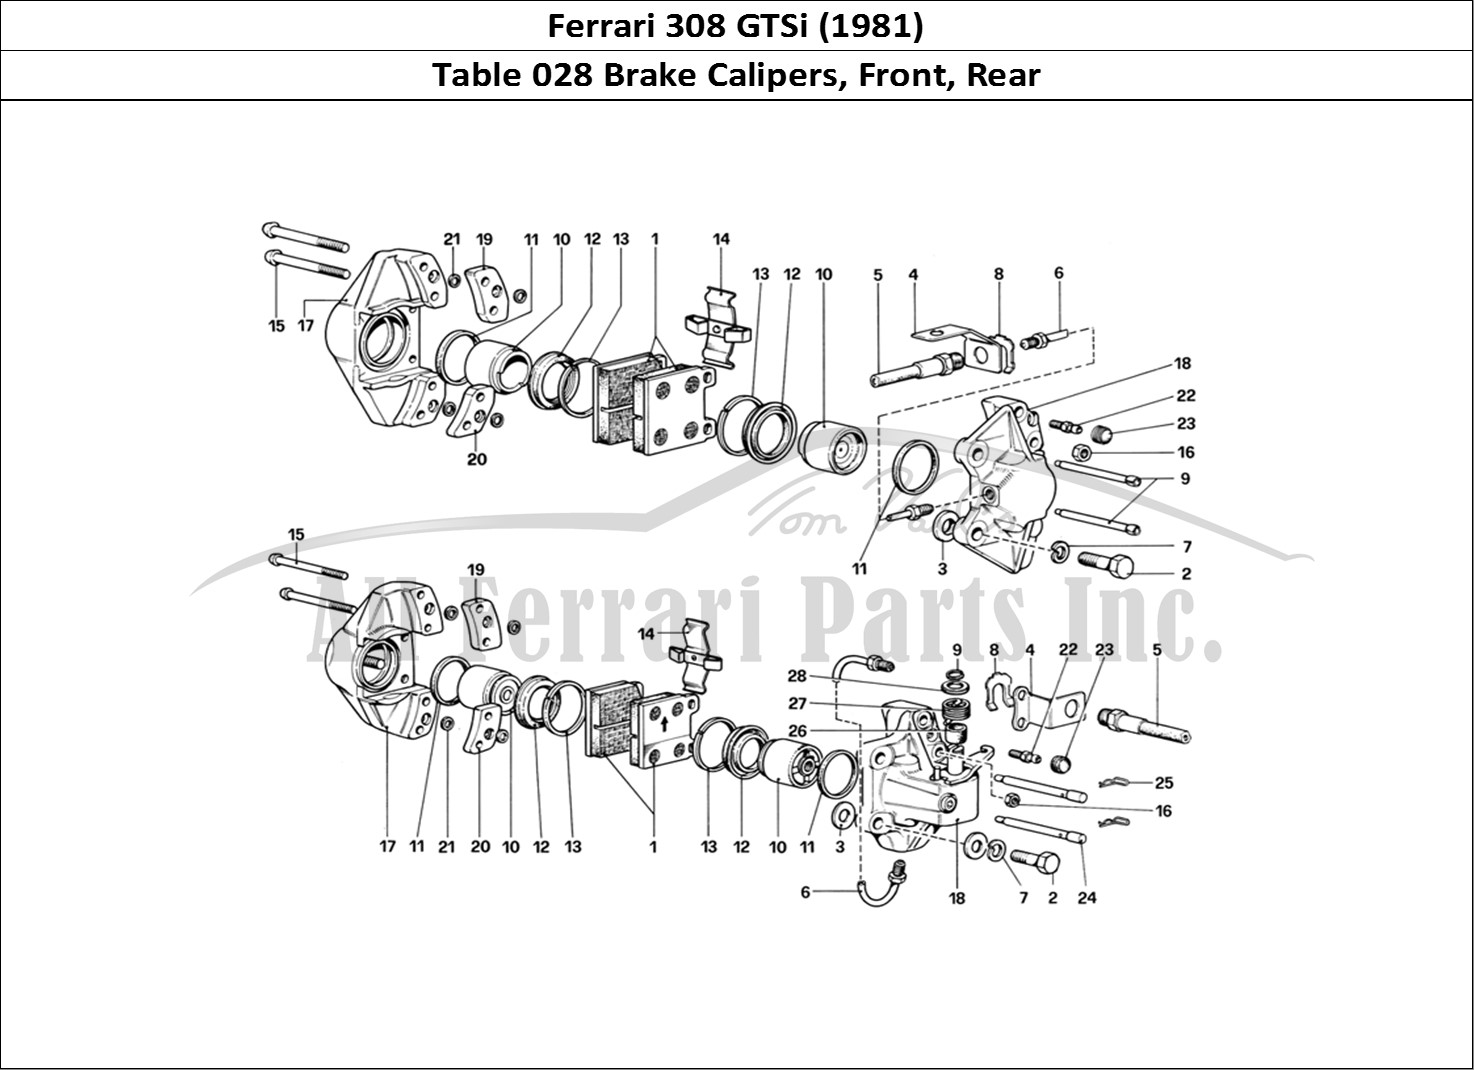 Ferrari Parts Ferrari 308 GTBi (1981) Page 028 Calipers for Front and Re